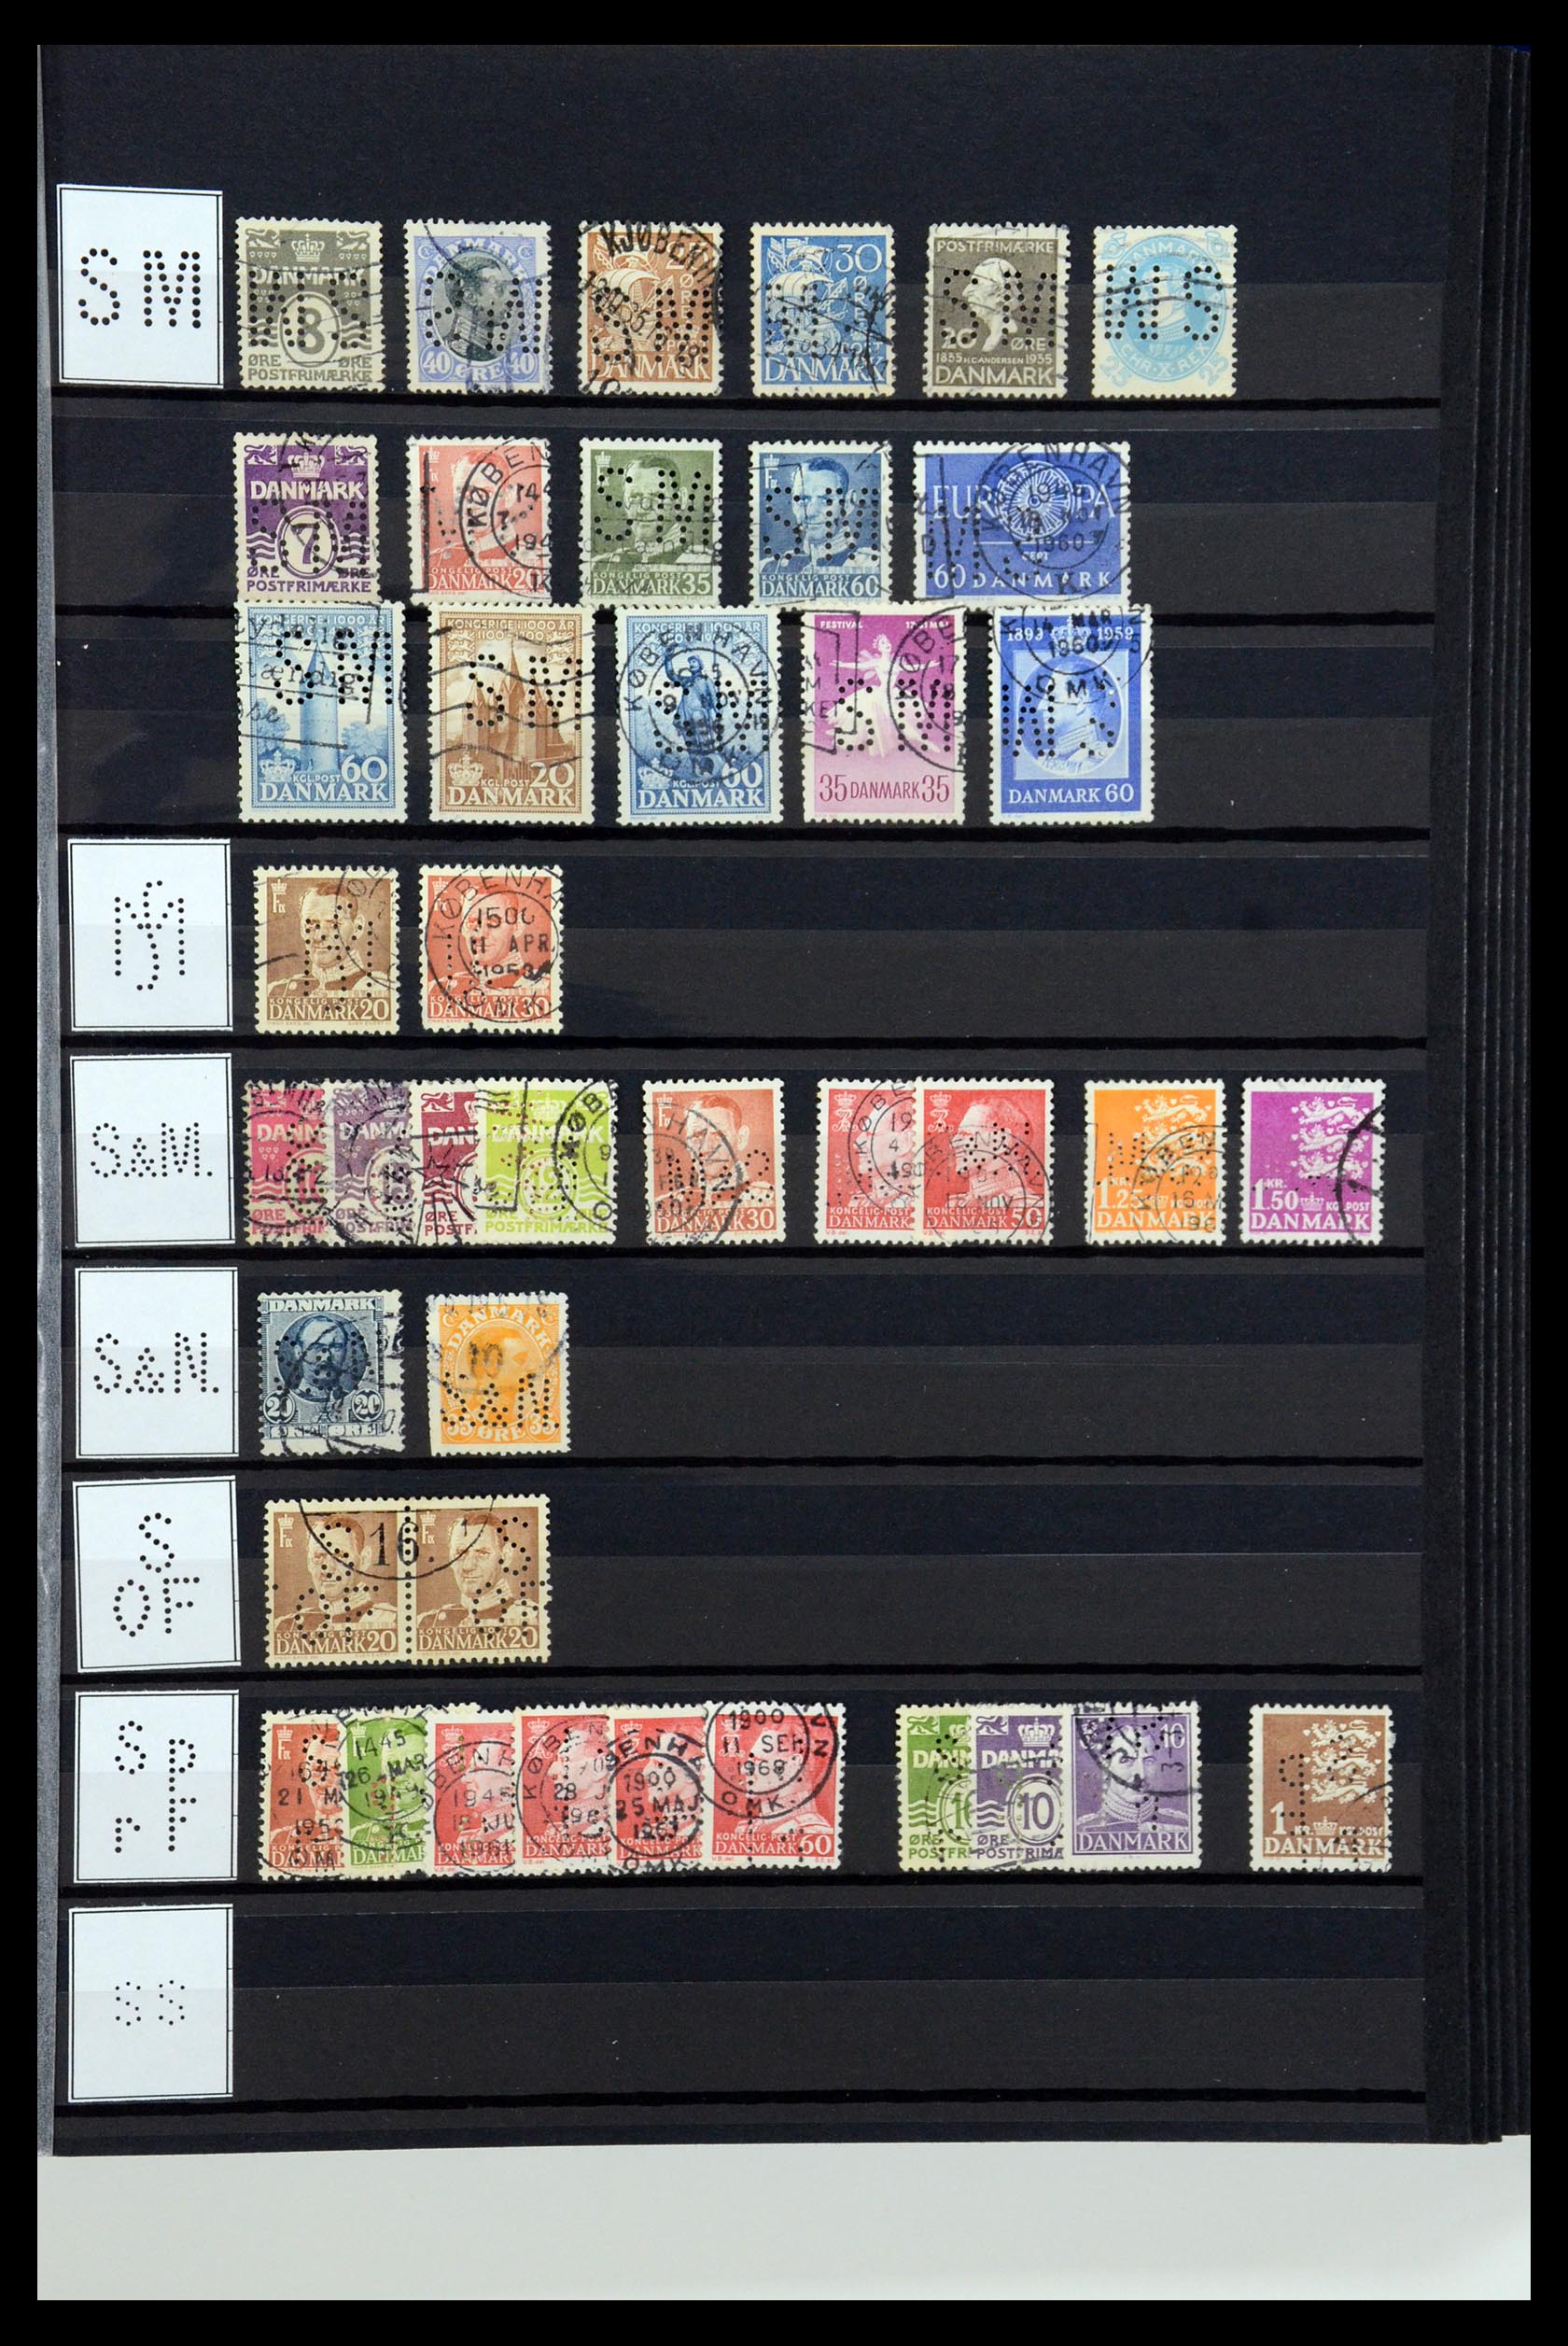 36396 209 - Stamp collection 36396 Denmark perfins.